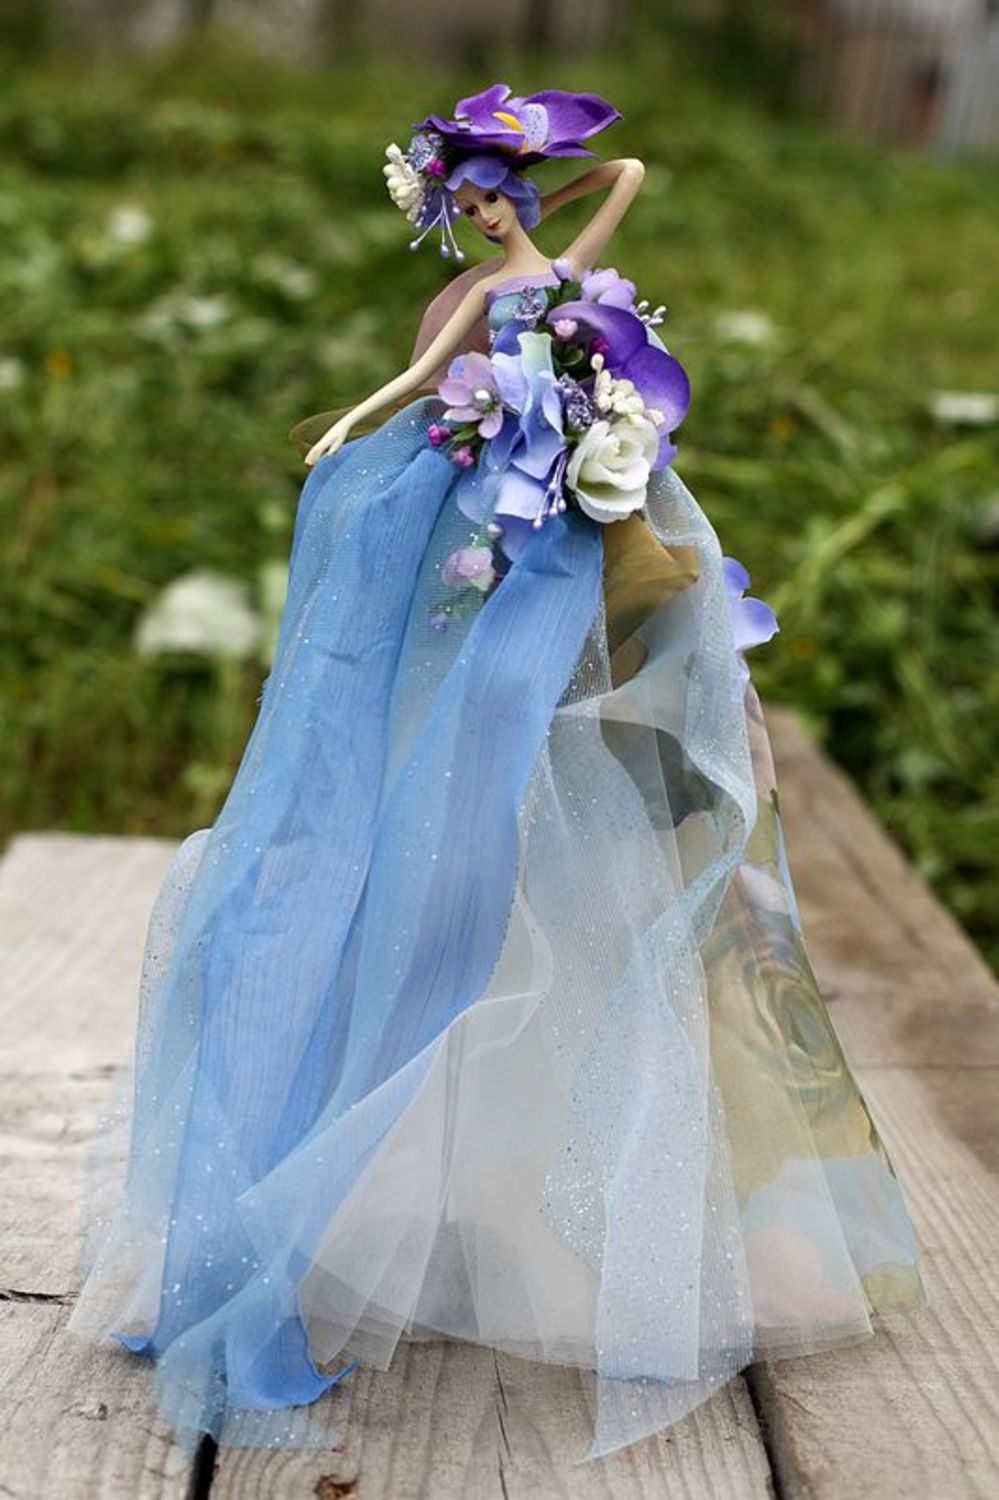 Poupée faite main pour mariage en robe bleue photo 2